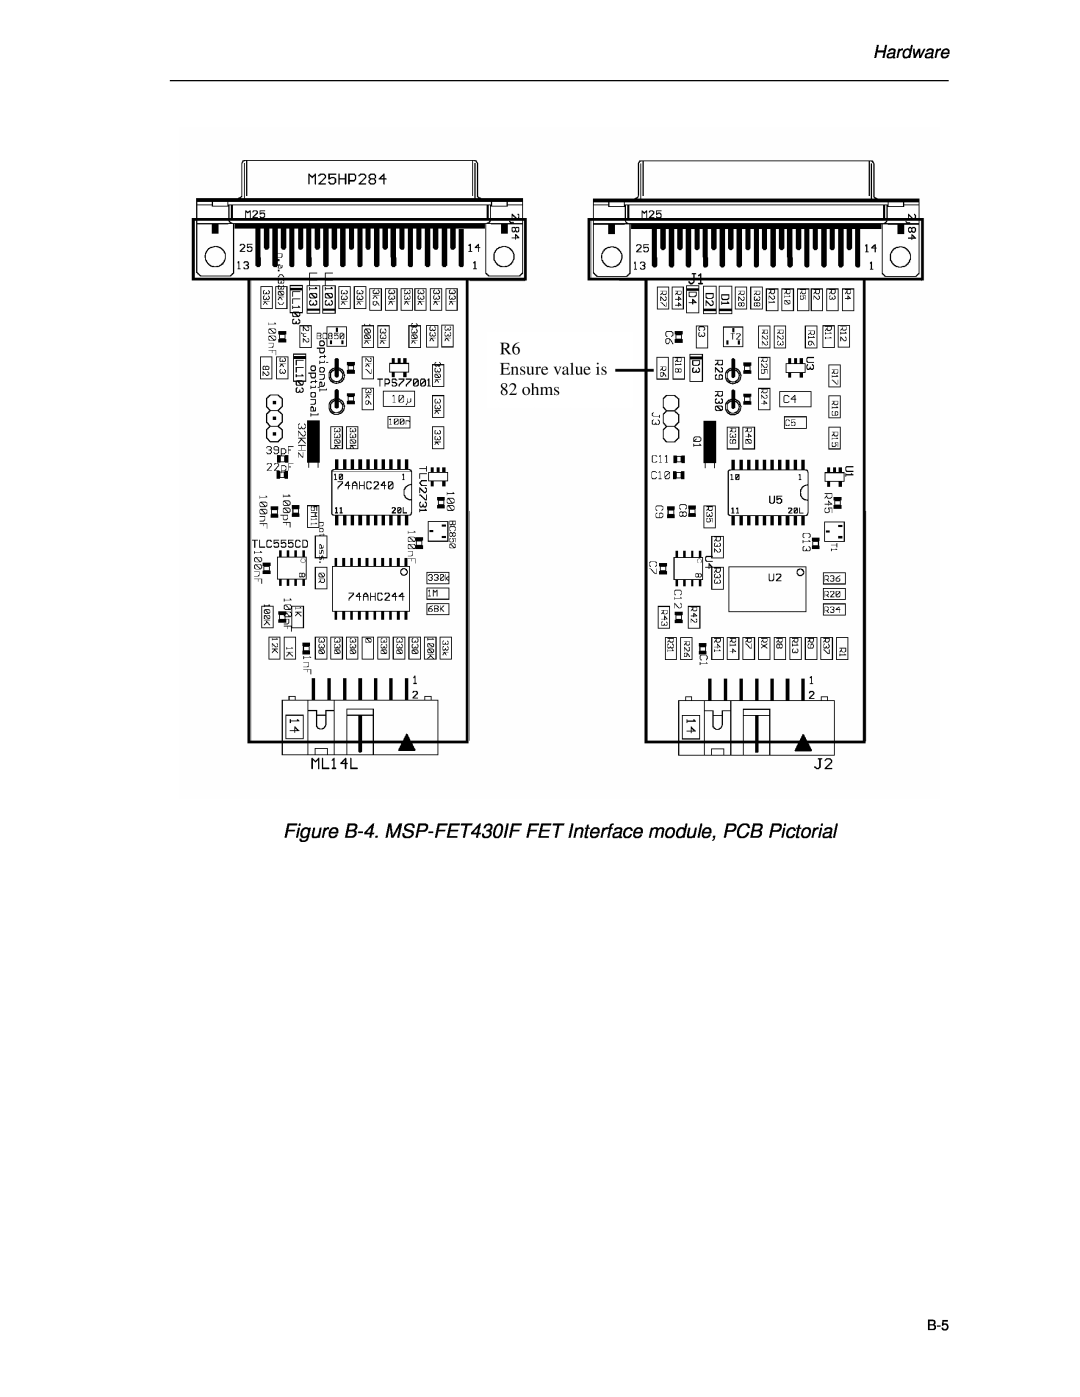 Texas Instruments Figure B-4. MSP-FET430IF FET Interface module, PCB Pictorial, Hardware, R6 Ensure value is 82 ohms 